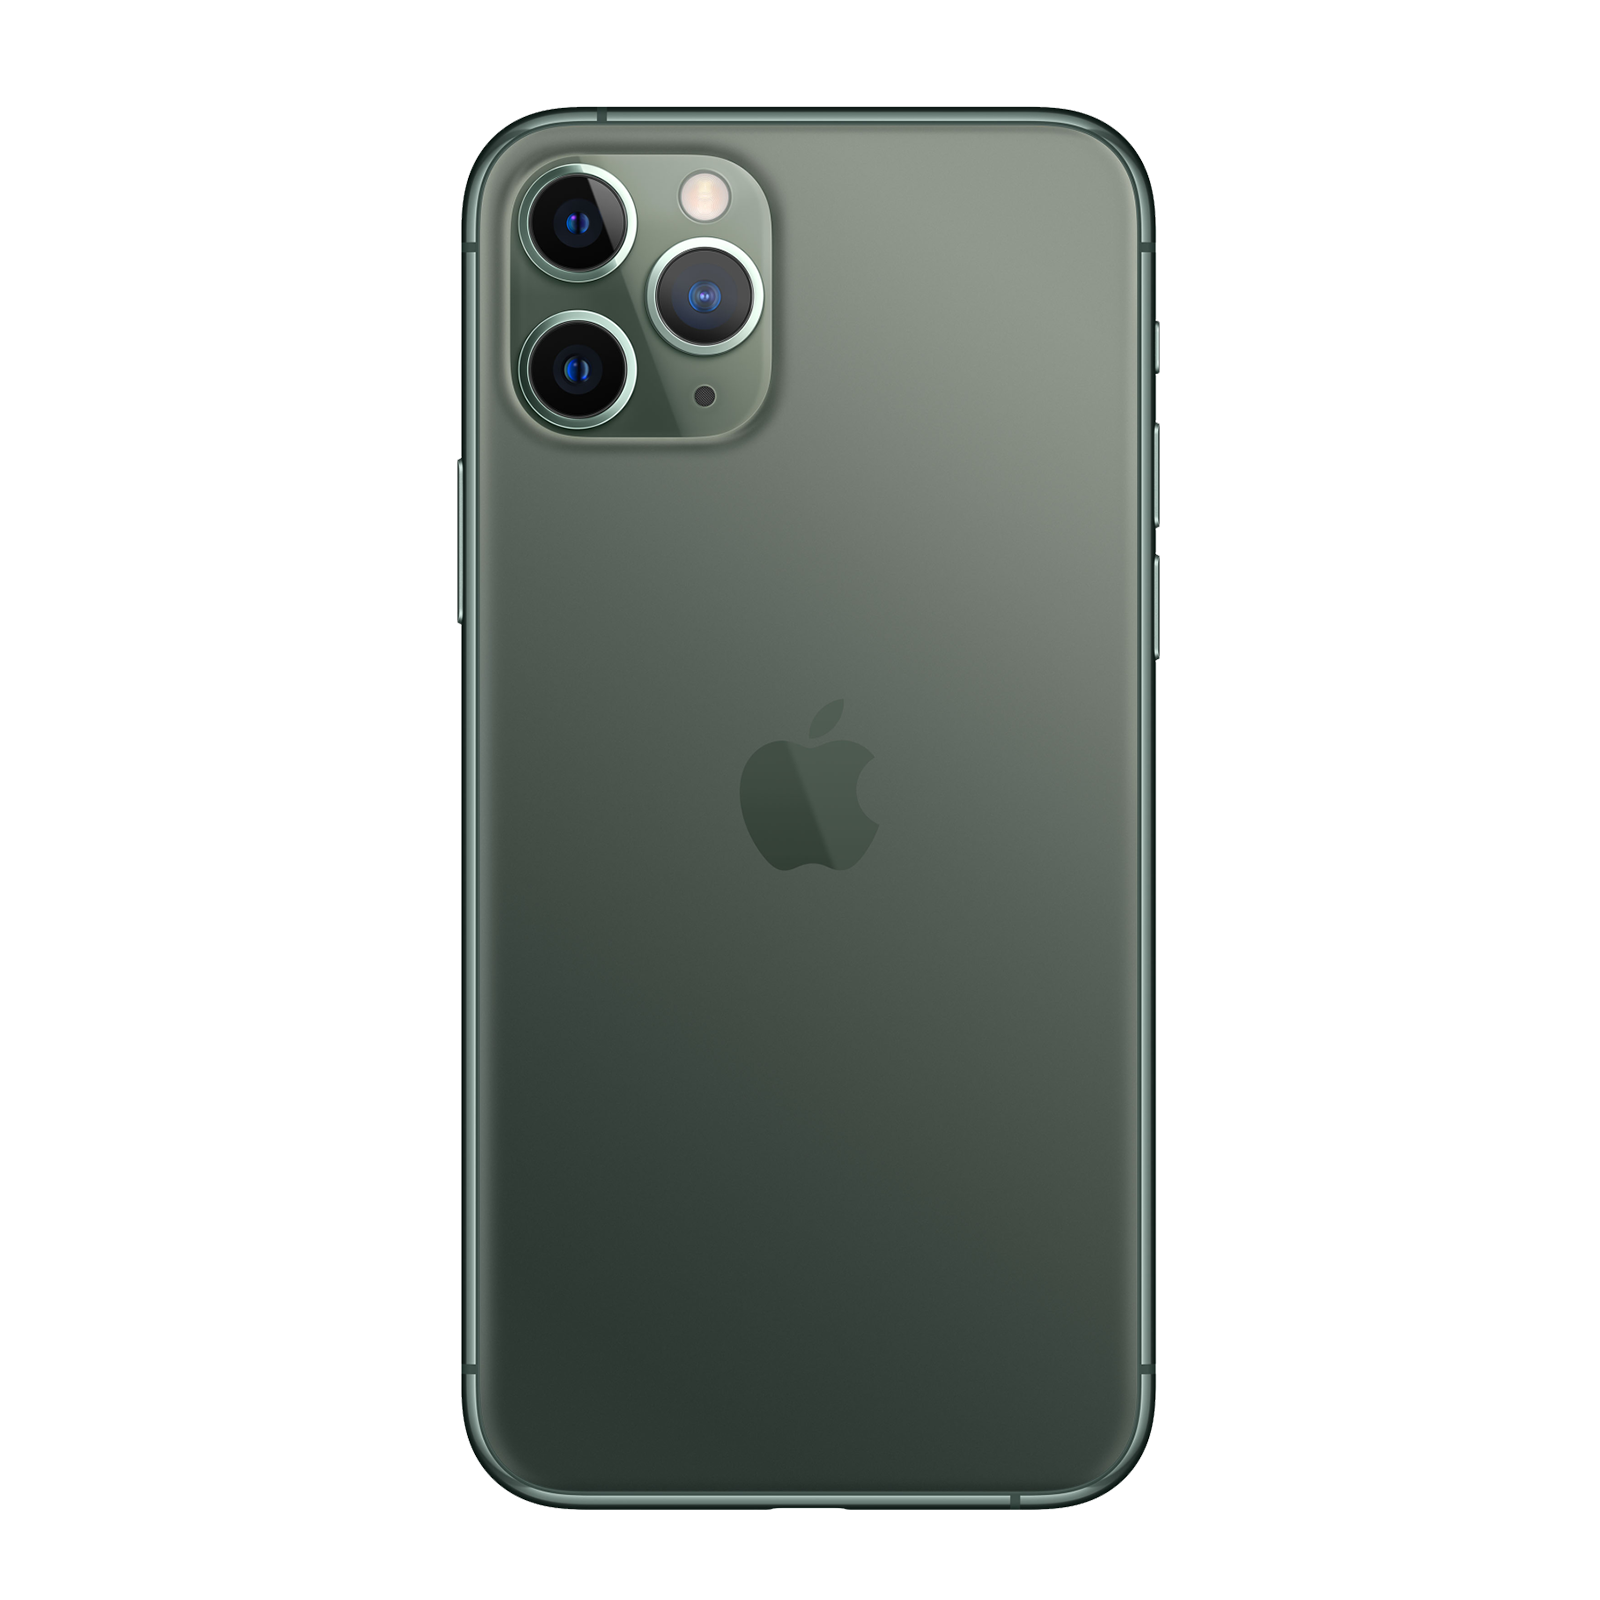 Apple iPhone 11 Pro Max 512GB Midnight Green Very Good - Sprint